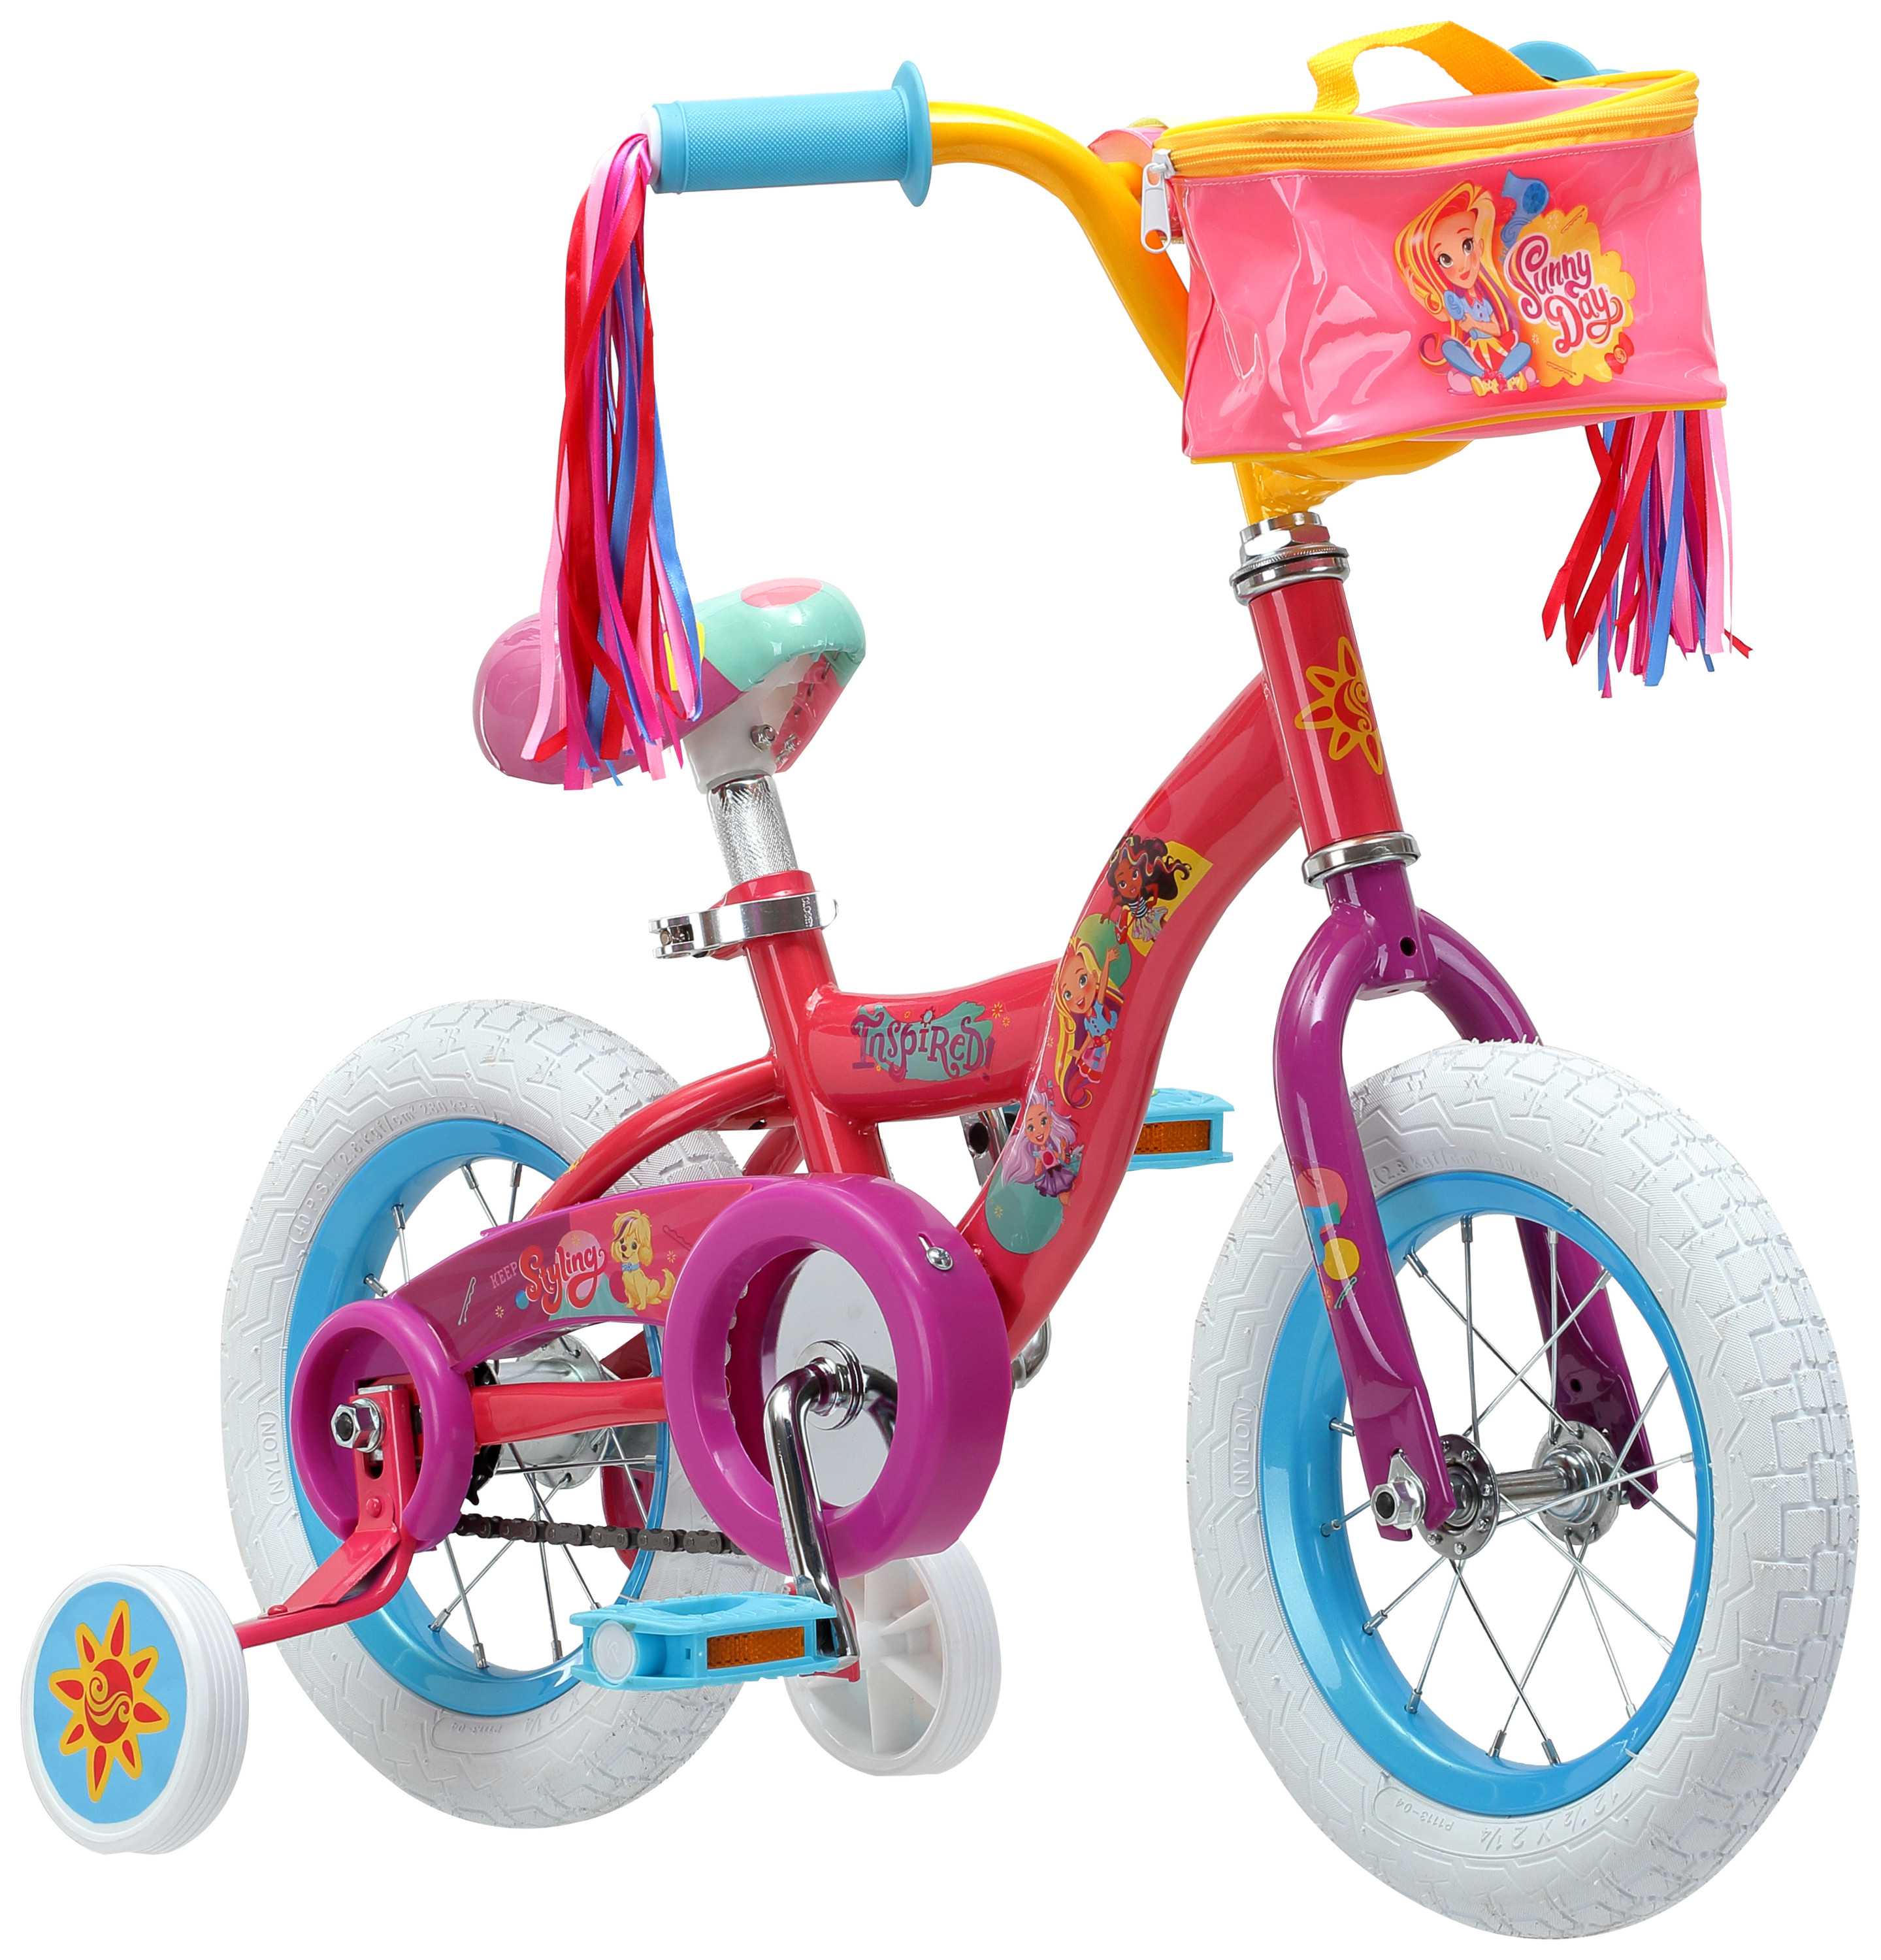 Nickelodeon Sunny Day kids bike, 12-inch wheels, training wheels, Girls, Boys, Pink - image 4 of 5